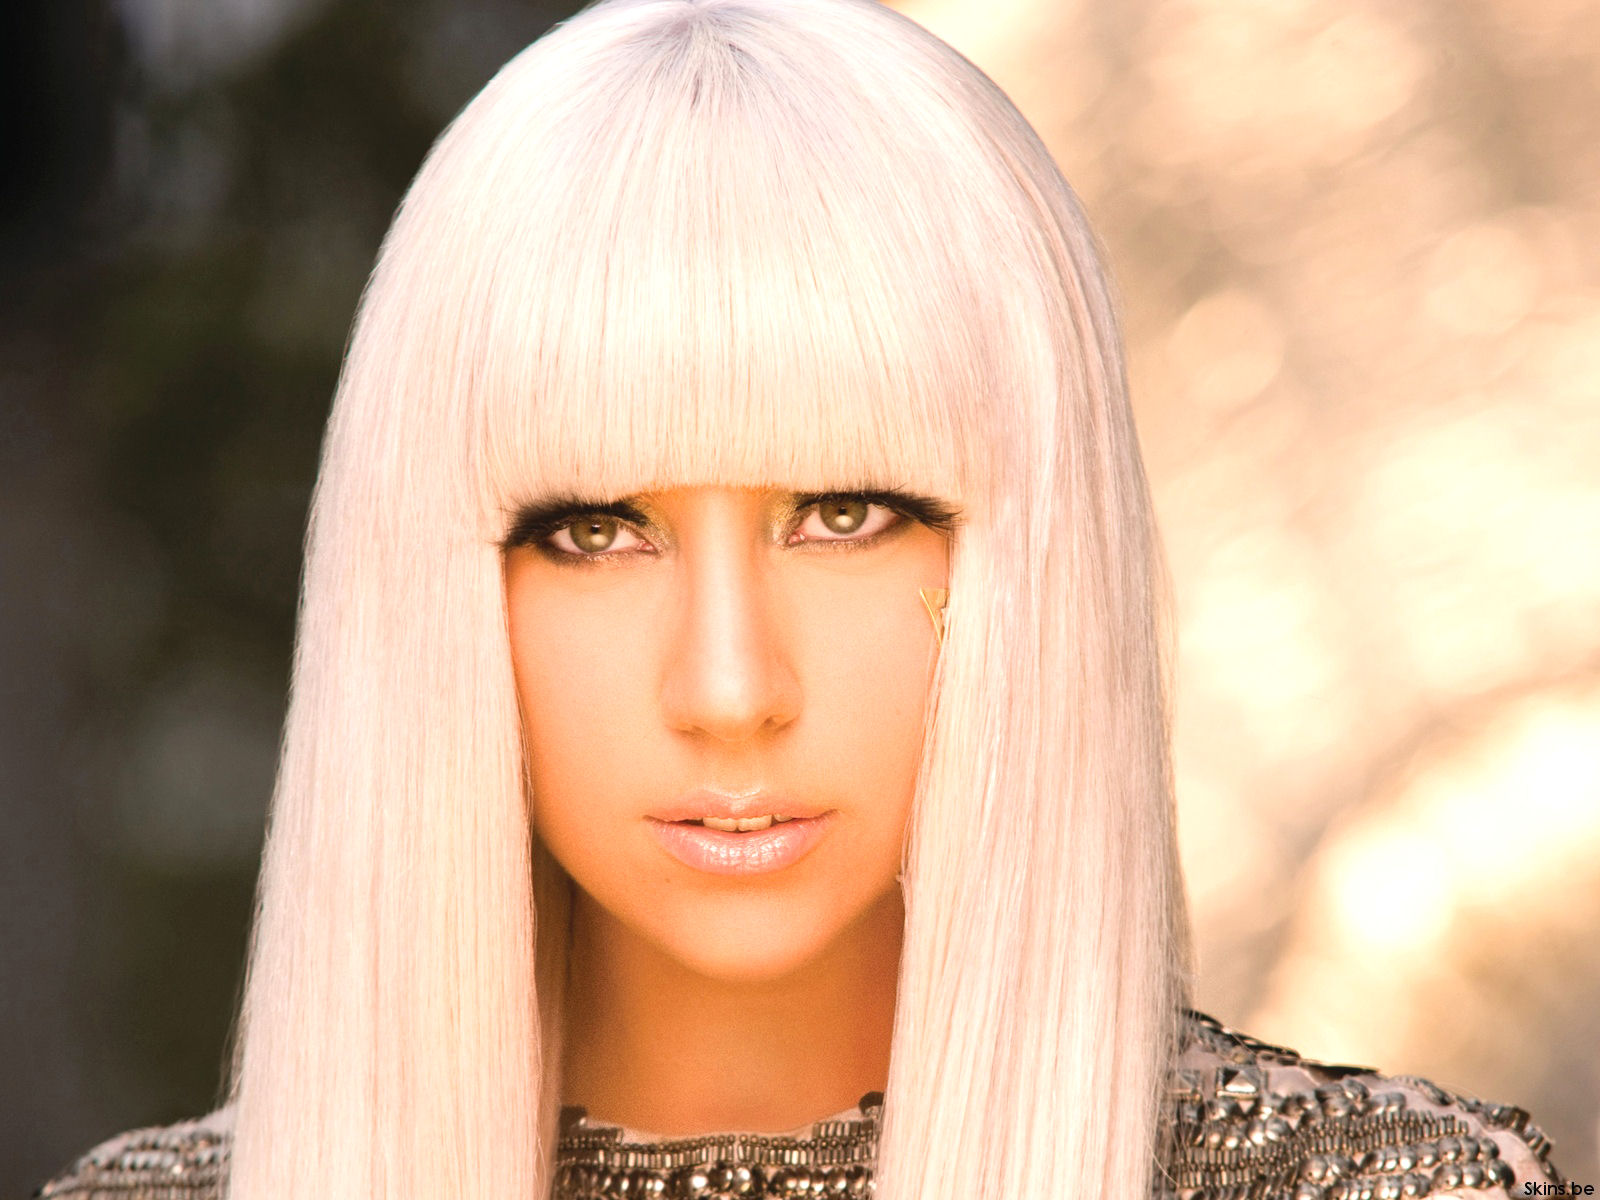 http://3.bp.blogspot.com/-tsPCVeCAAVE/T1jezgruyYI/AAAAAAAAB6c/Z58-yNb1fmM/s1600/Lady-Gaga-Piccol%2B%25285%2529.jpg